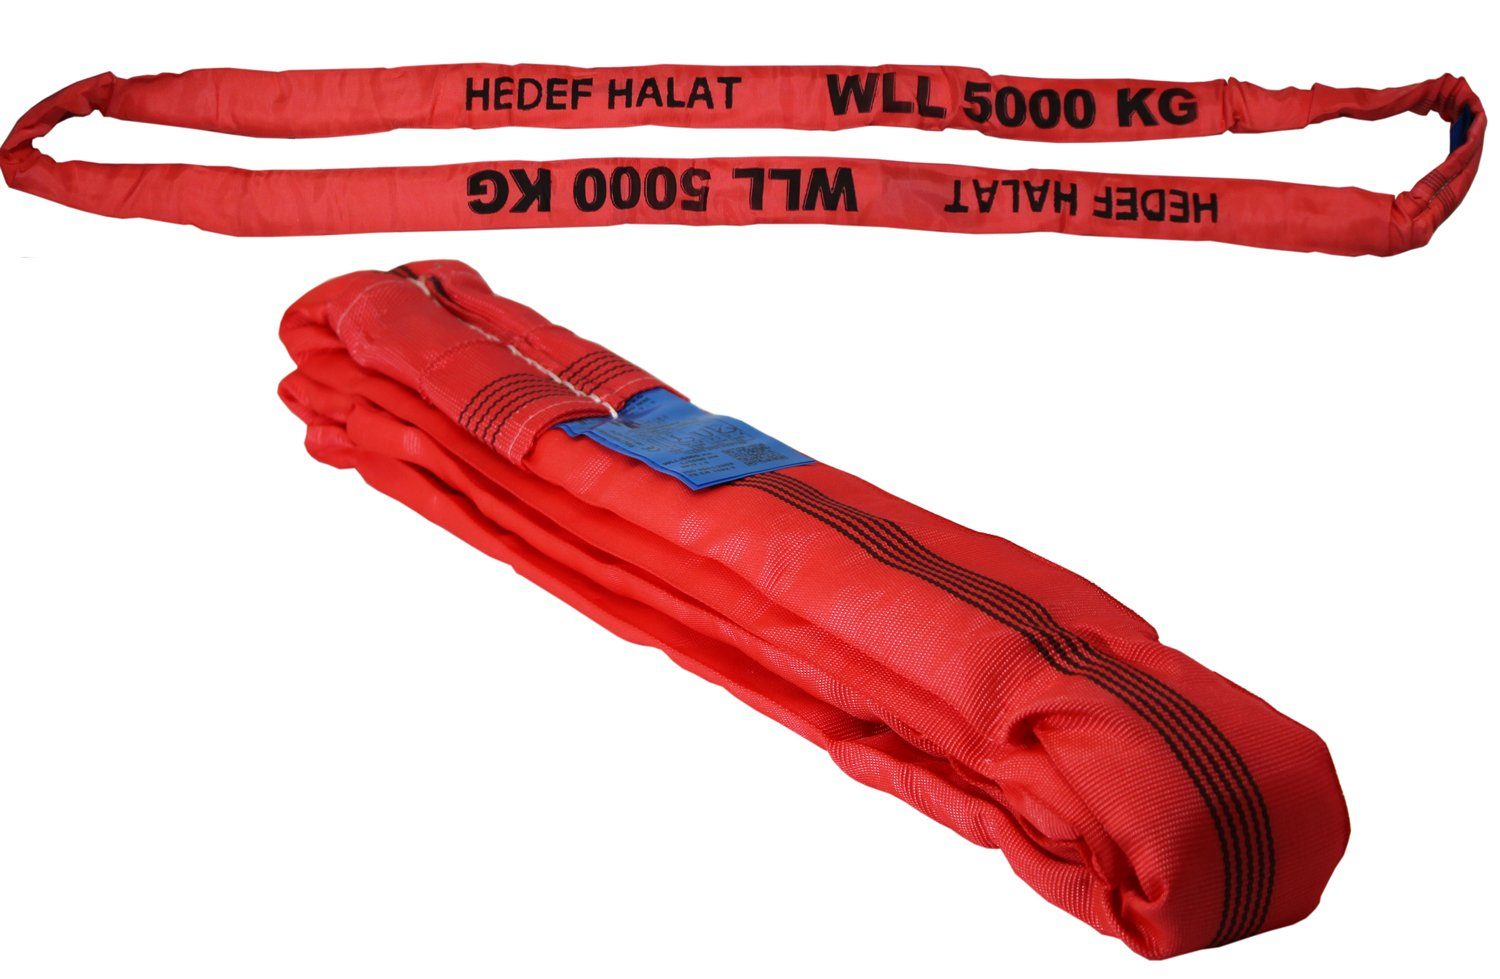 HEDEF HALAT Rundschlinge mit Einfachmantel 5 Tonnen 10 Meter SF: 7/1 DIN EN 1492-2 Hebeband, Rundschlingen Bandschlinge Hebegurt 10 m (umfang 20 m)